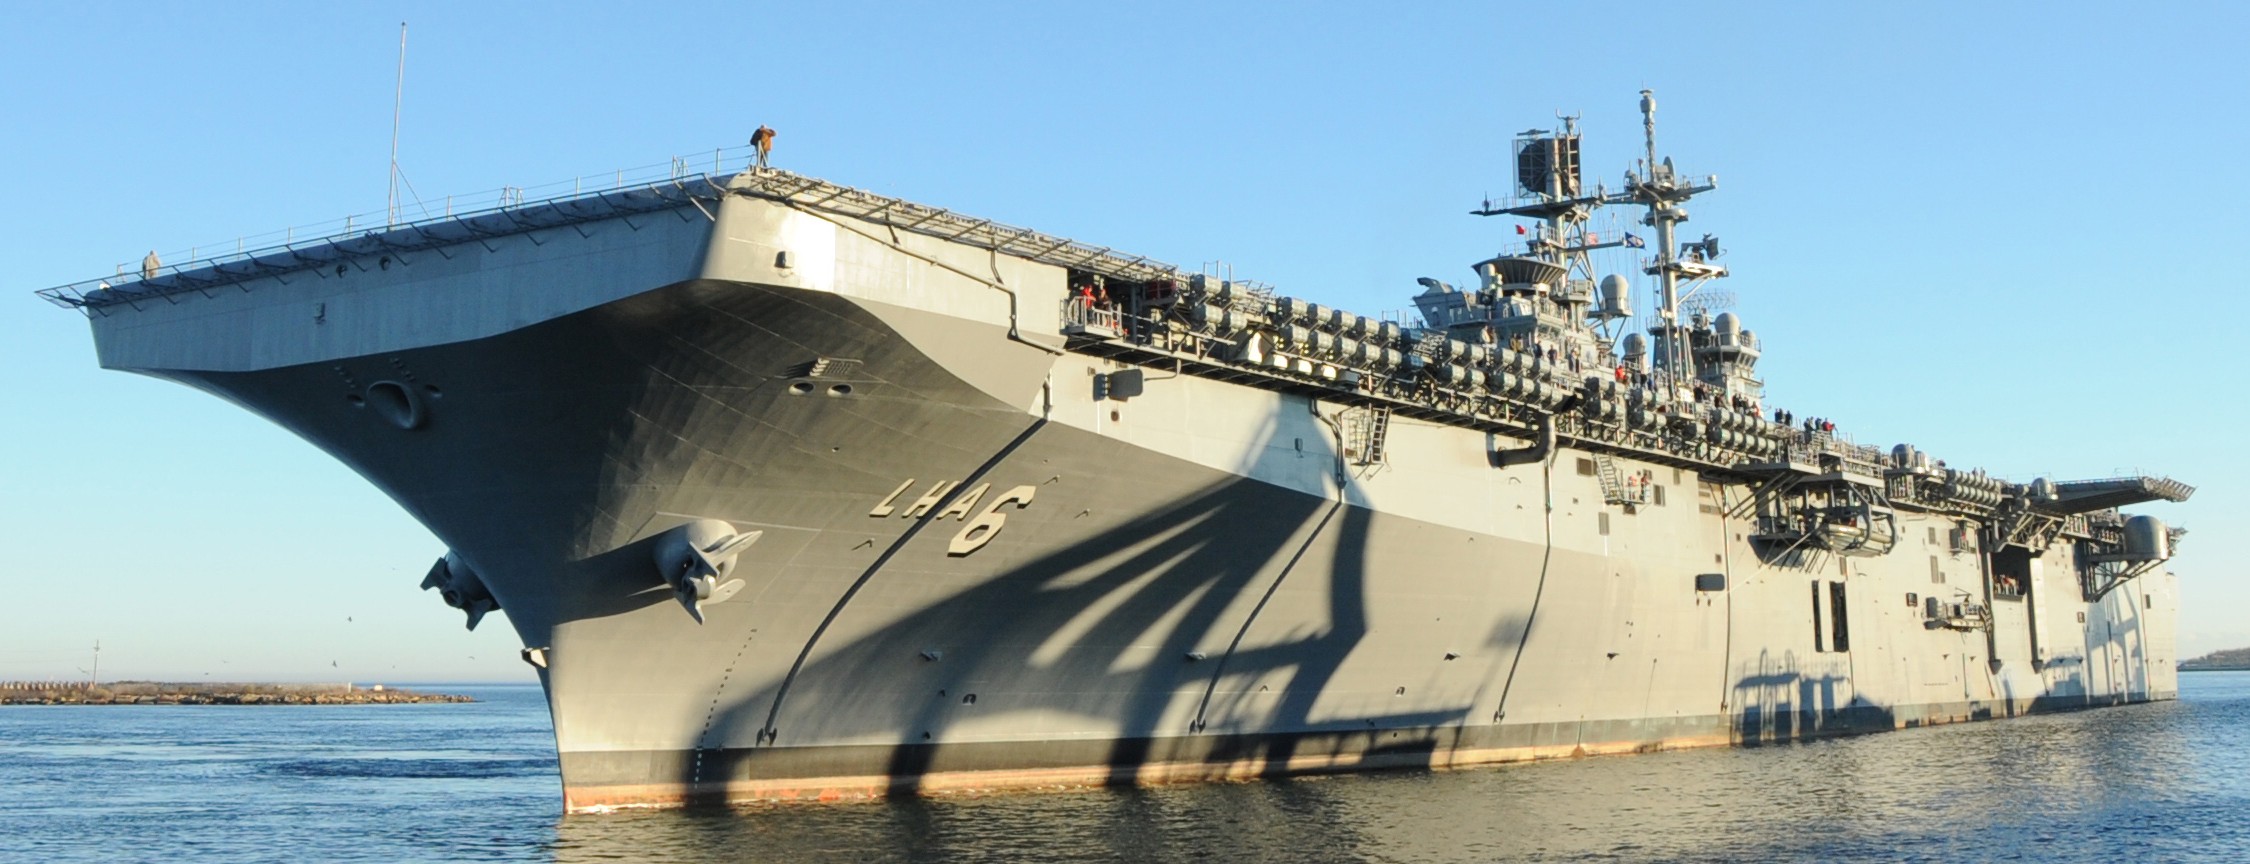 lha-6 uss america amphibious assault ship us navy 86